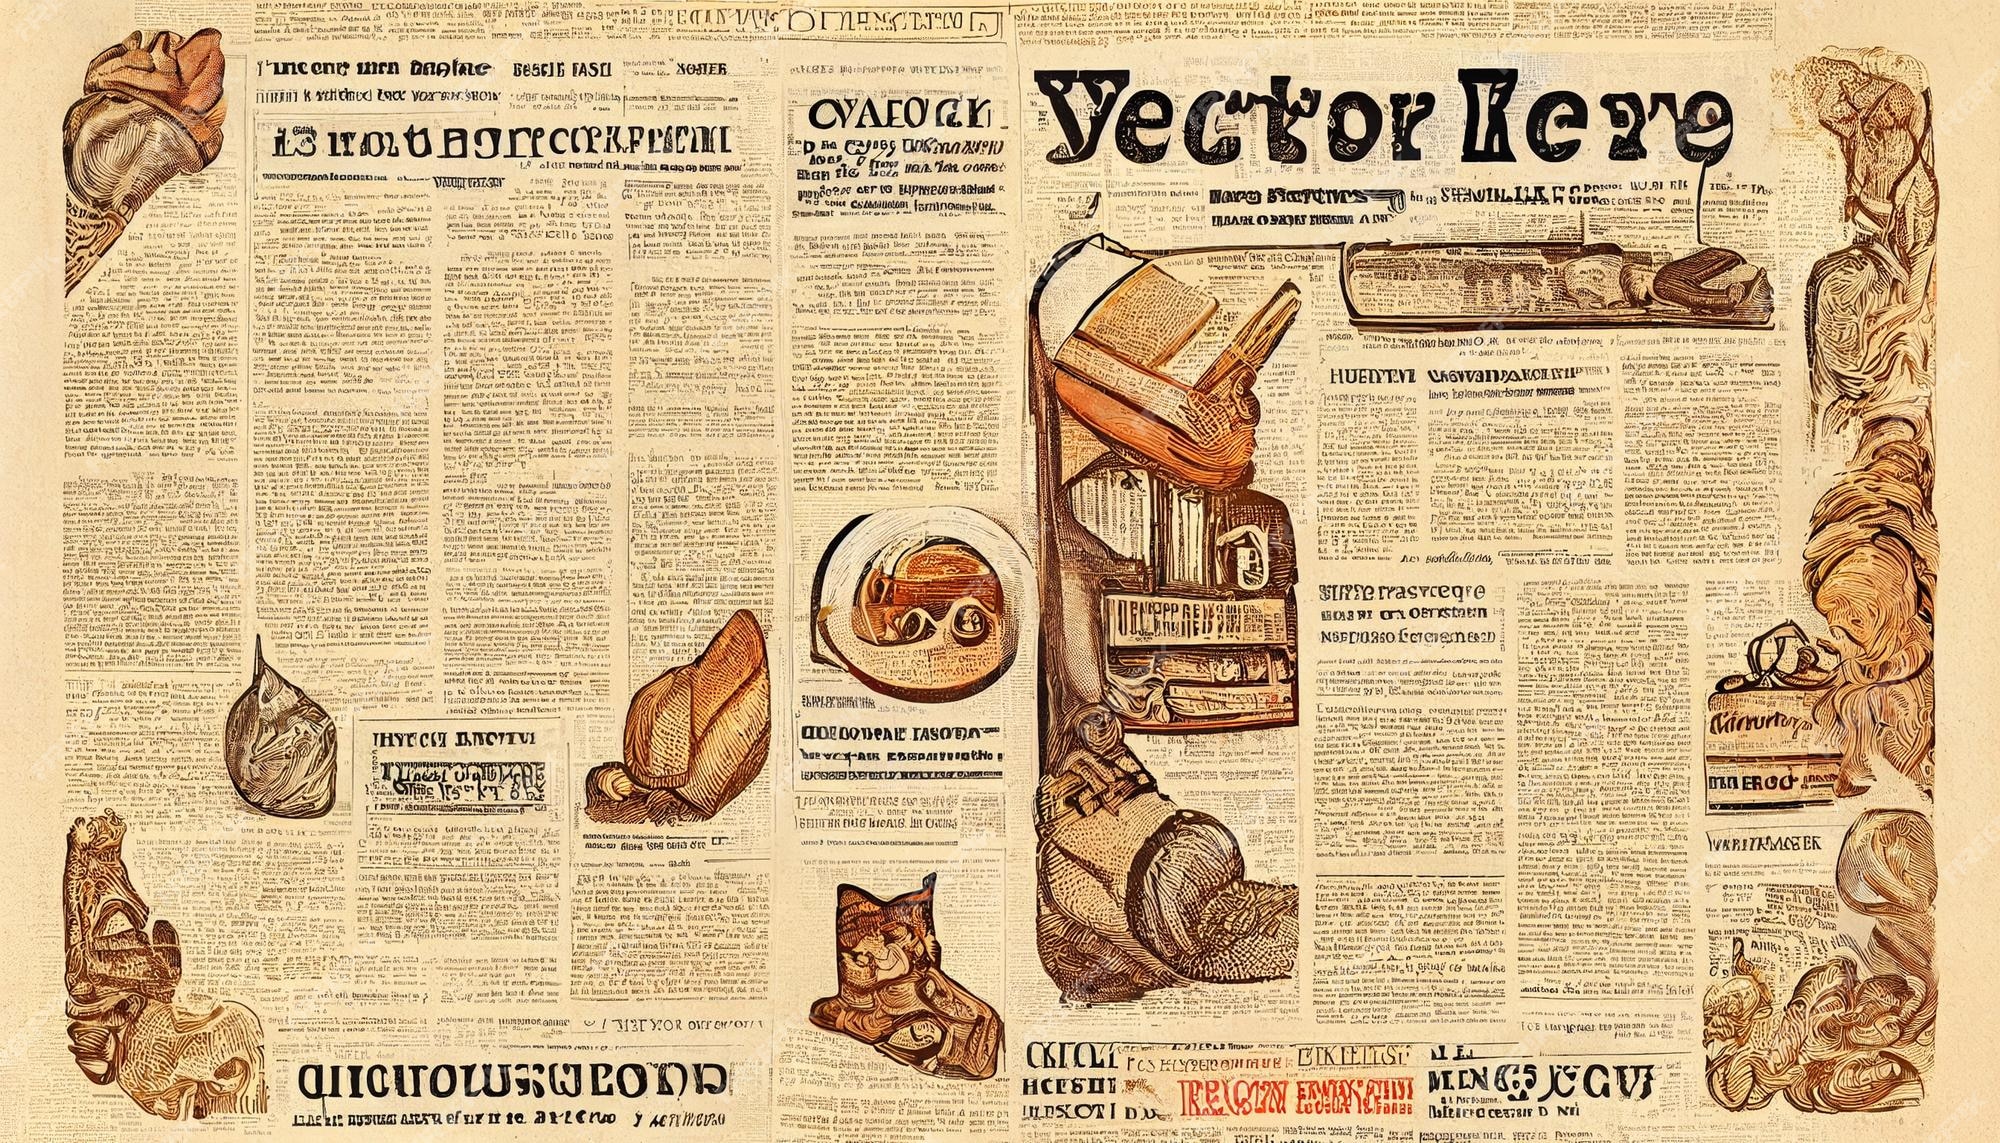 Premium Photo | Vintage newspaper illustration background image